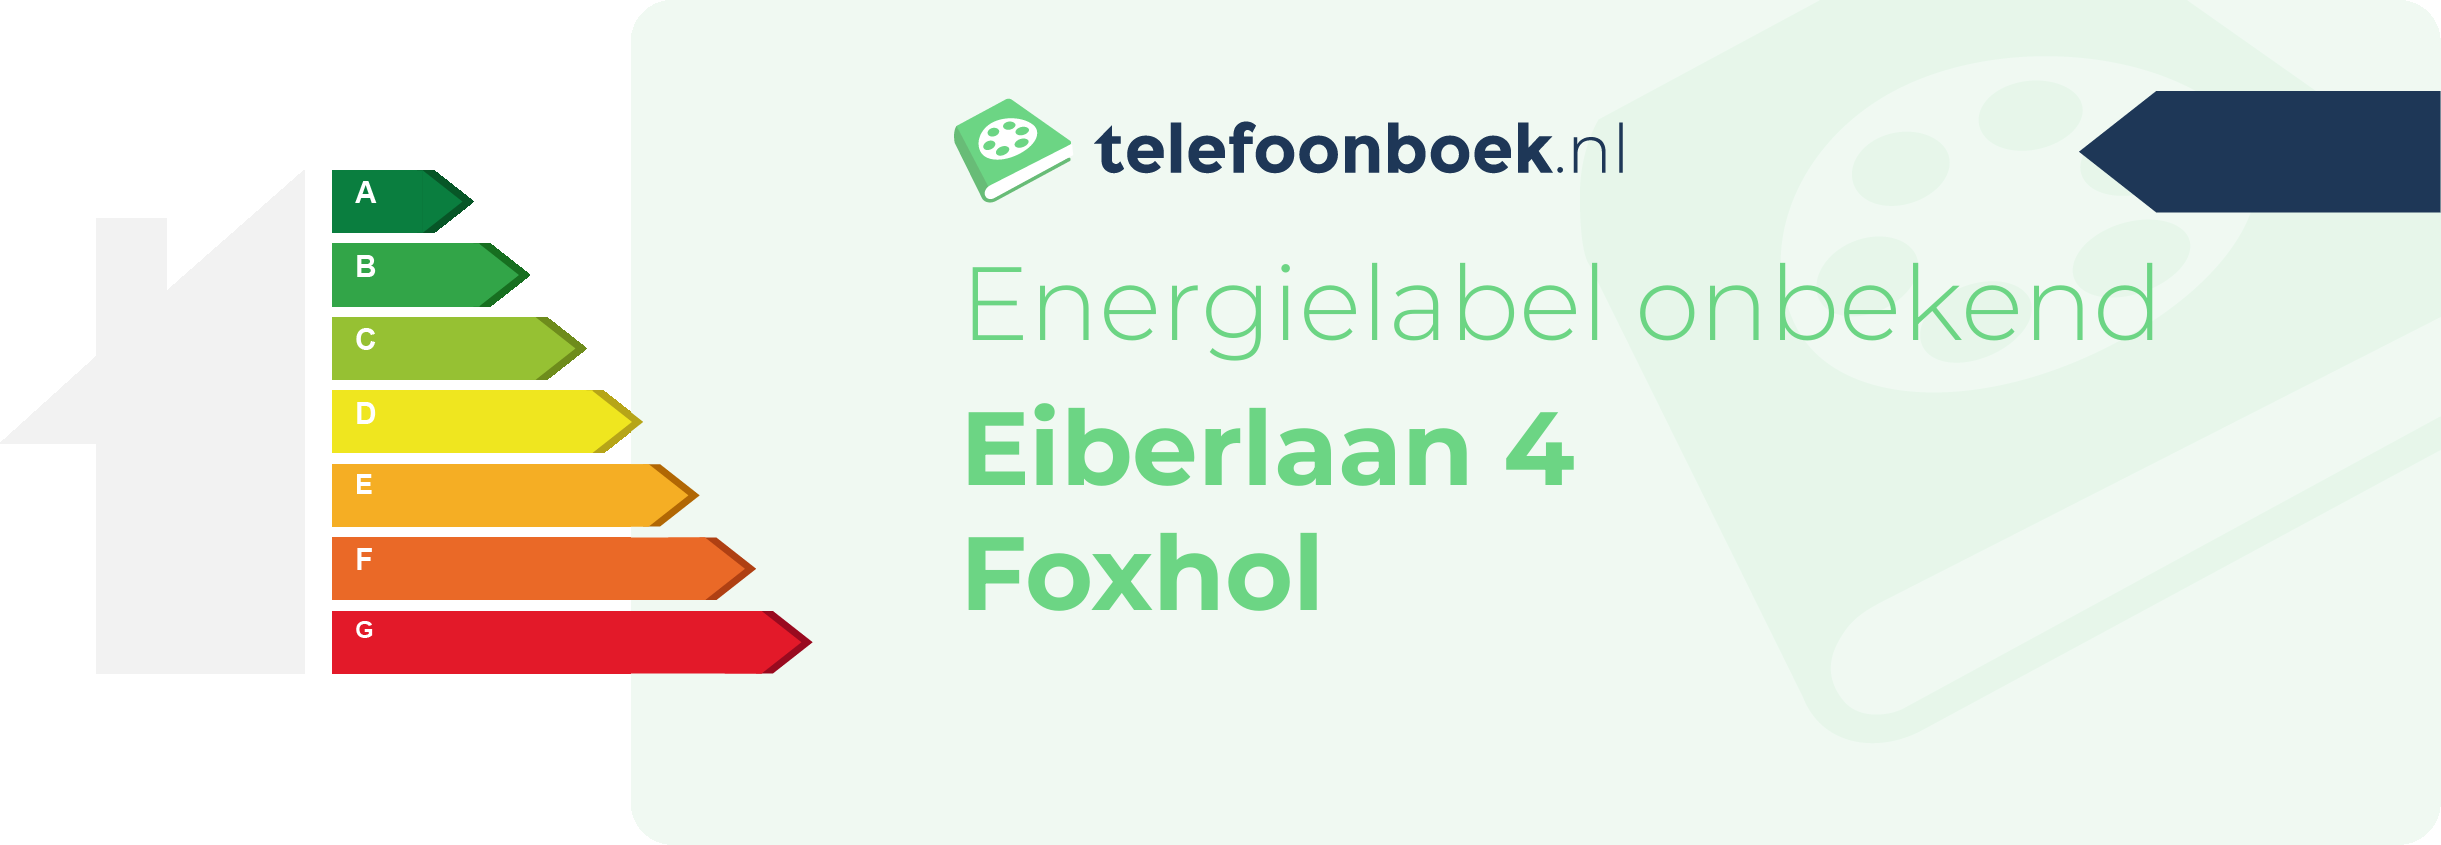 Energielabel Eiberlaan 4 Foxhol